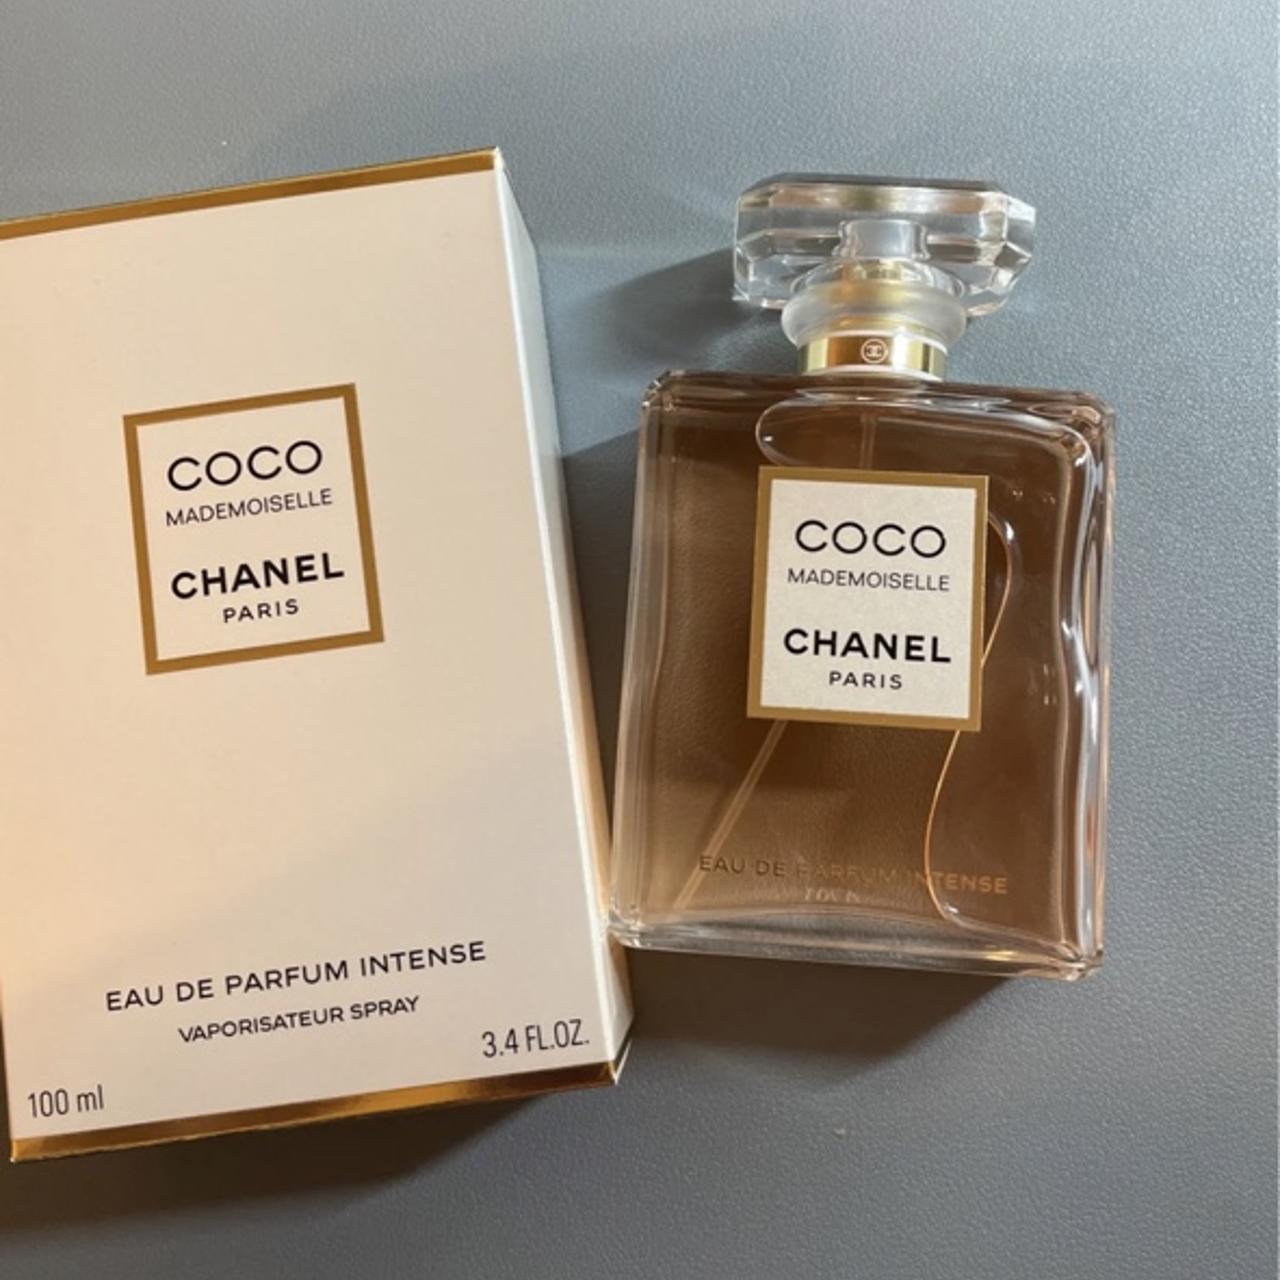 Chanel Coco Mademoiselle Eau de Parfum Intense, 100 ml (батч code